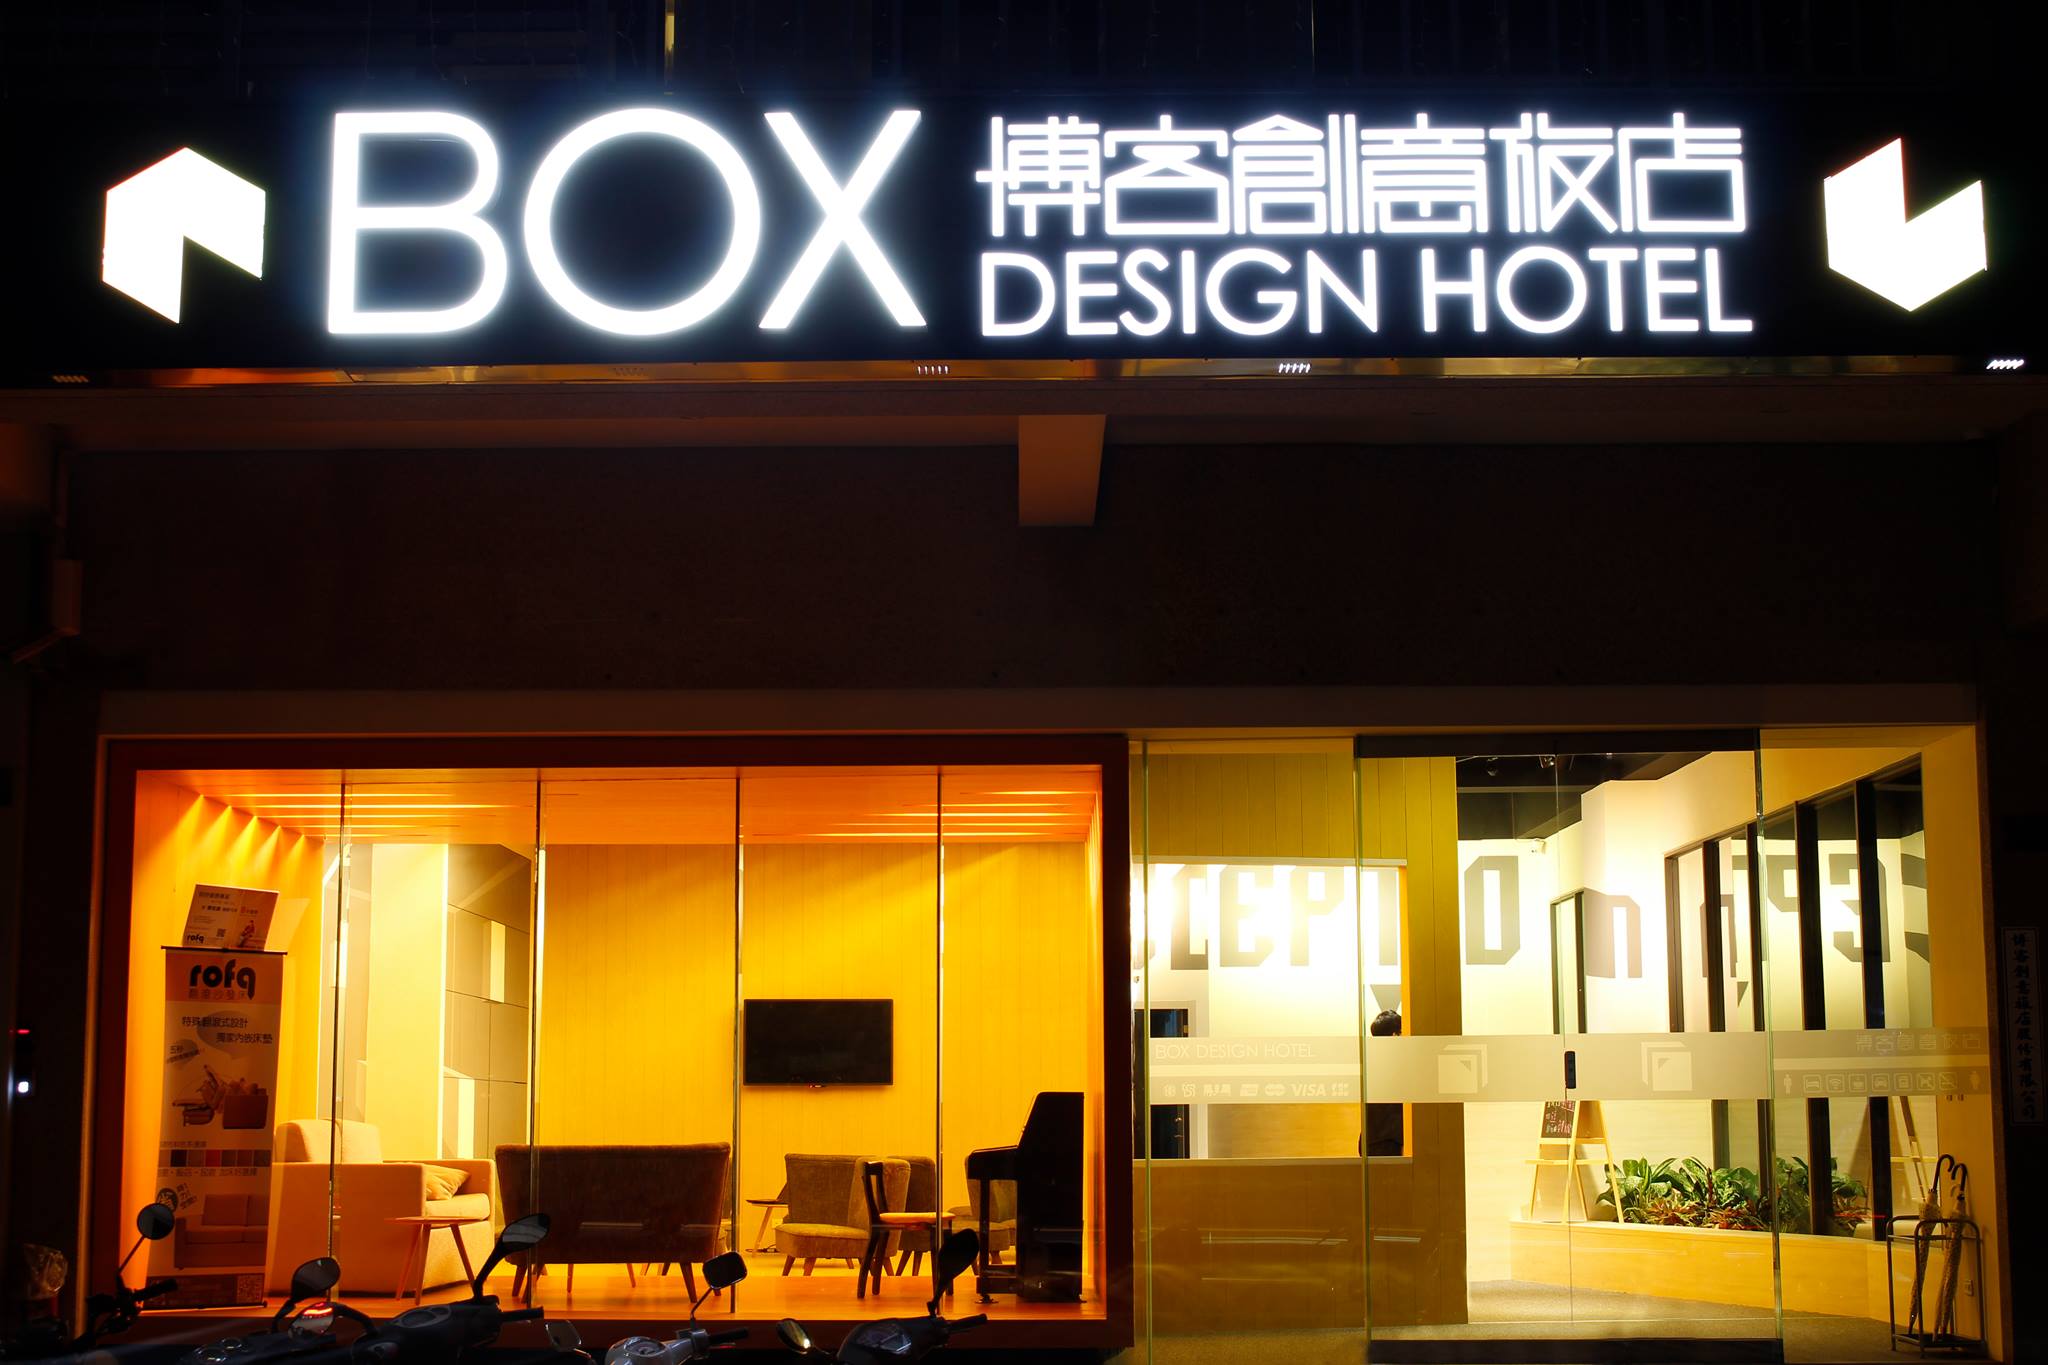 博客創意旅店外觀
Box Design Hotel-Exterior Design